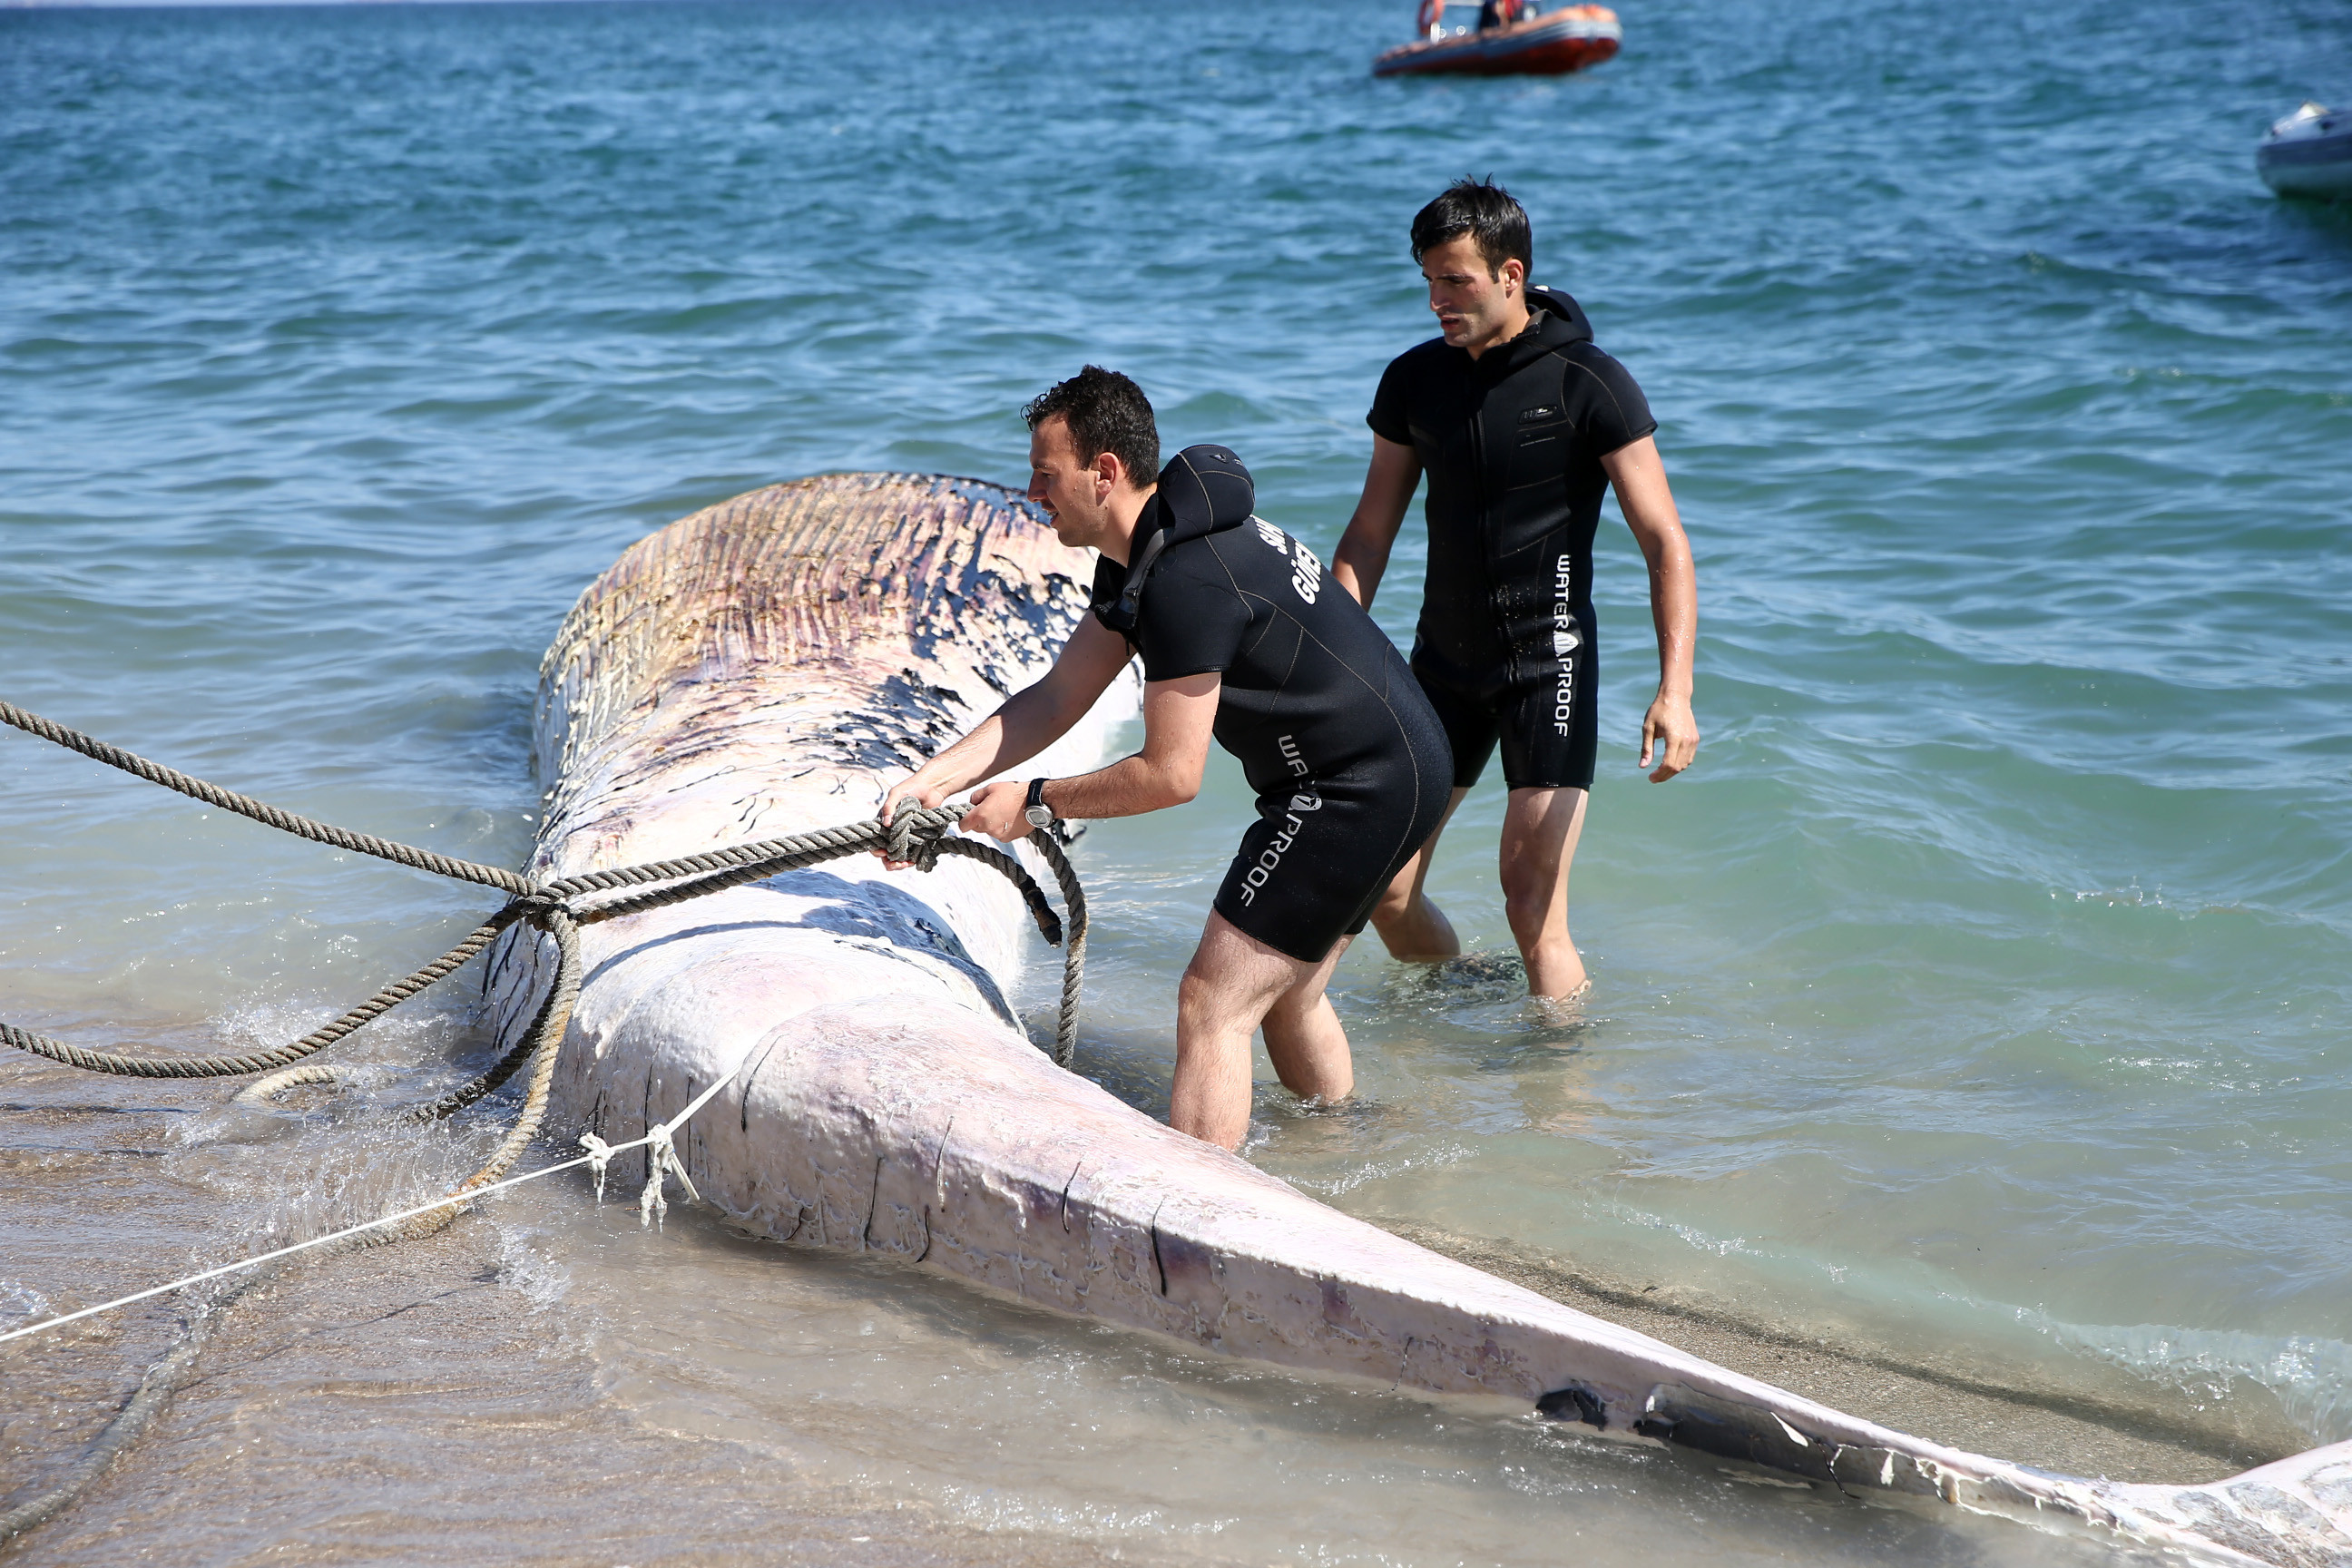 Mersin sahiline 14 metrelik oluklu balina vurdu - Resim: 2